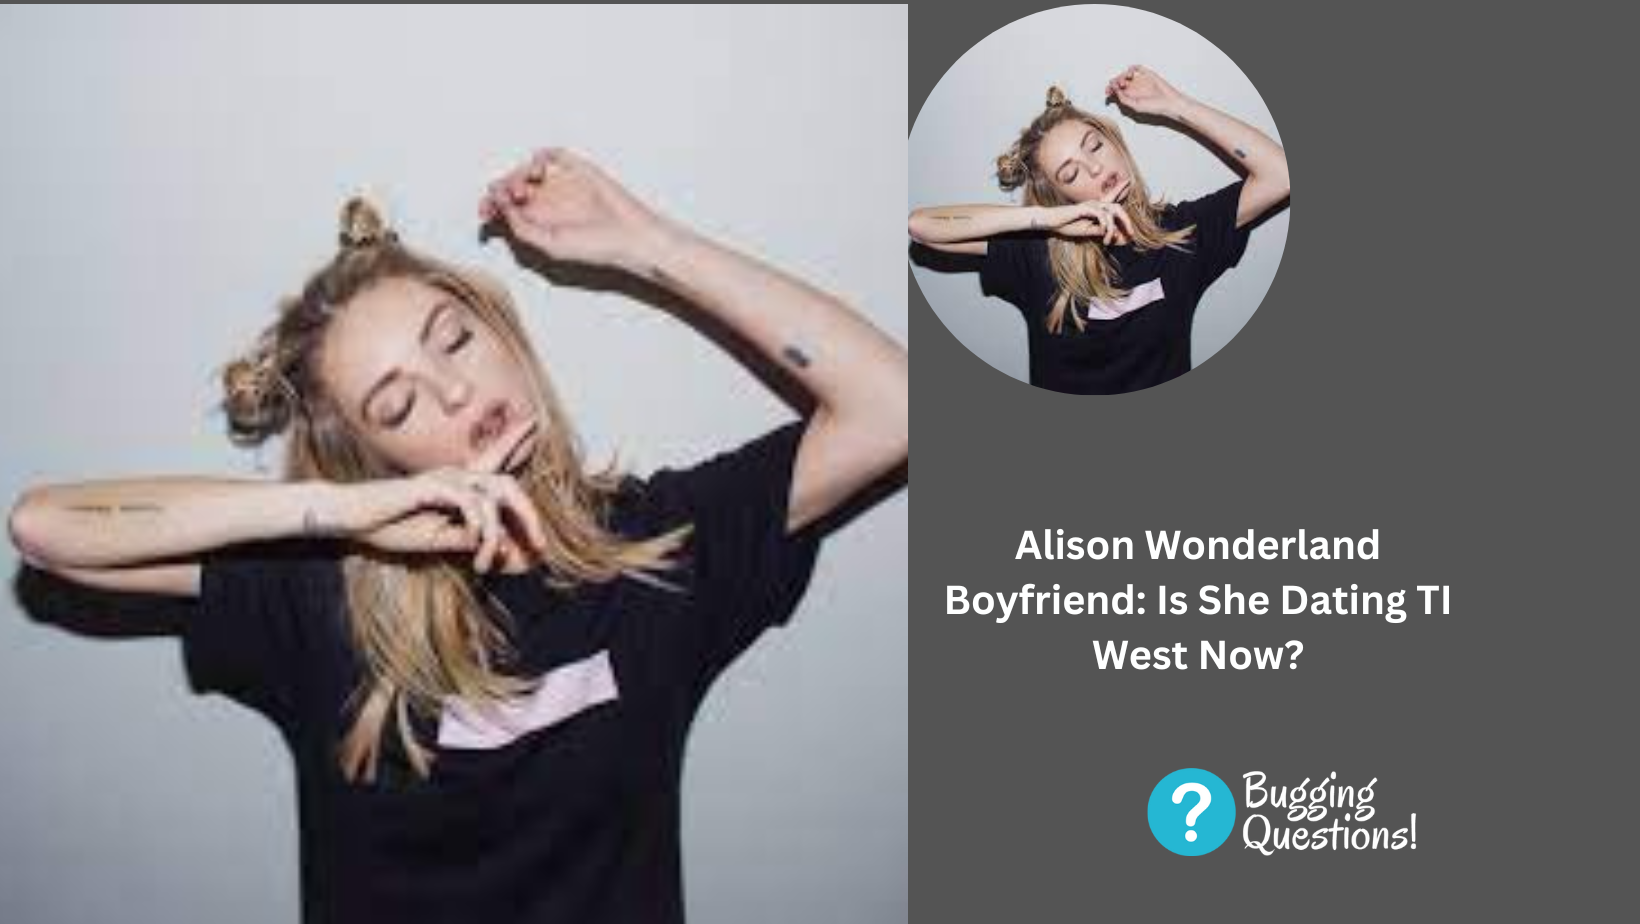 Alison Wonderland Boyfriend: Is She Dating TI West Now?